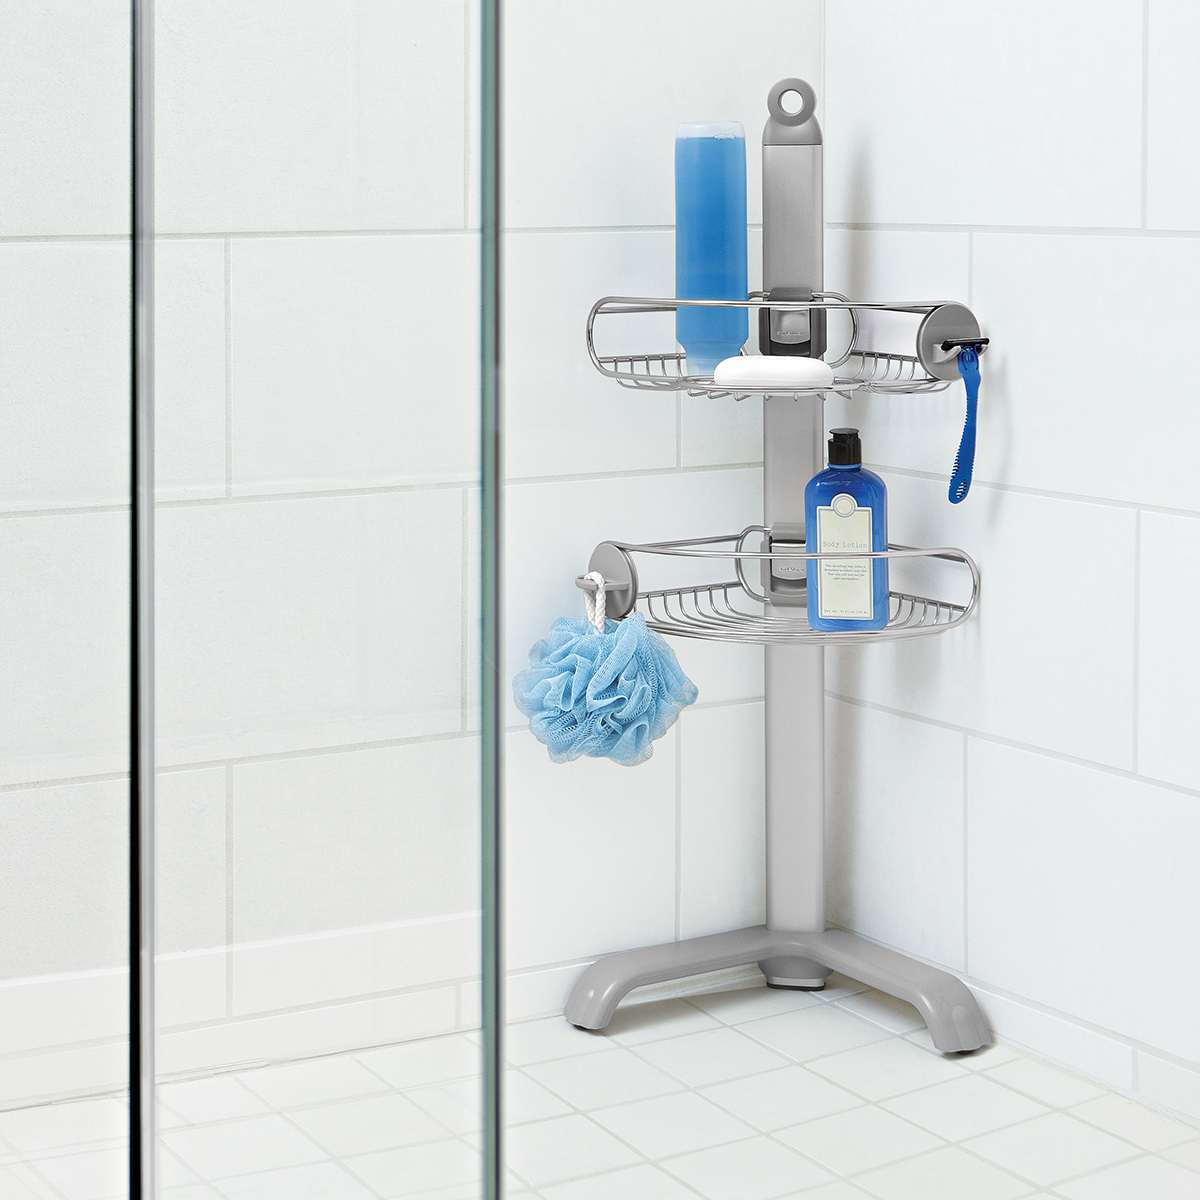 Free Standing Corner Shower Shelf: Easy Installation with GoShelf